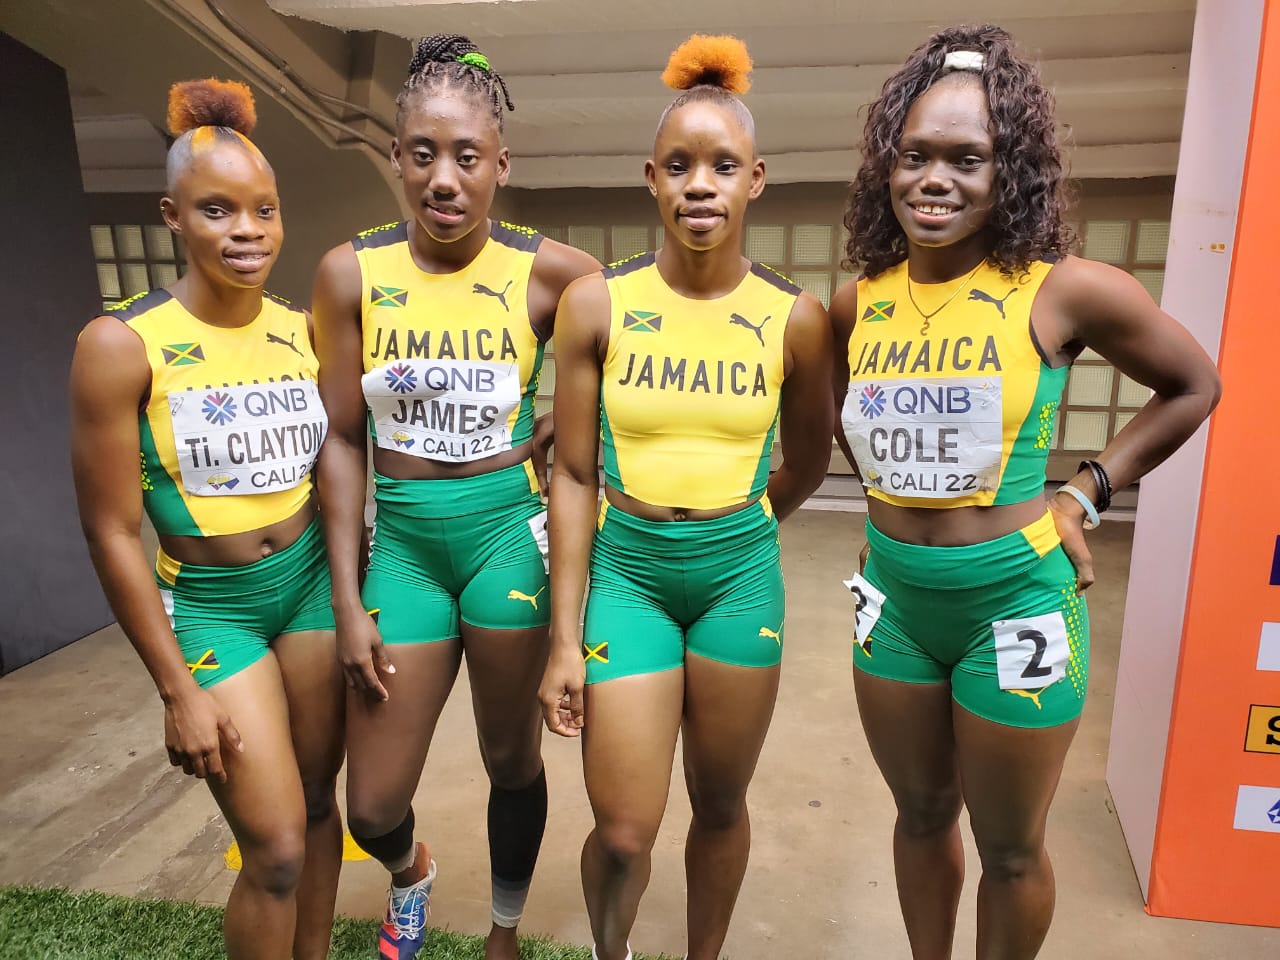 Jamaica women's 4x100m team, left to right, Tia Clayton, Alexis James, Tina Clayton and Serena Cole.